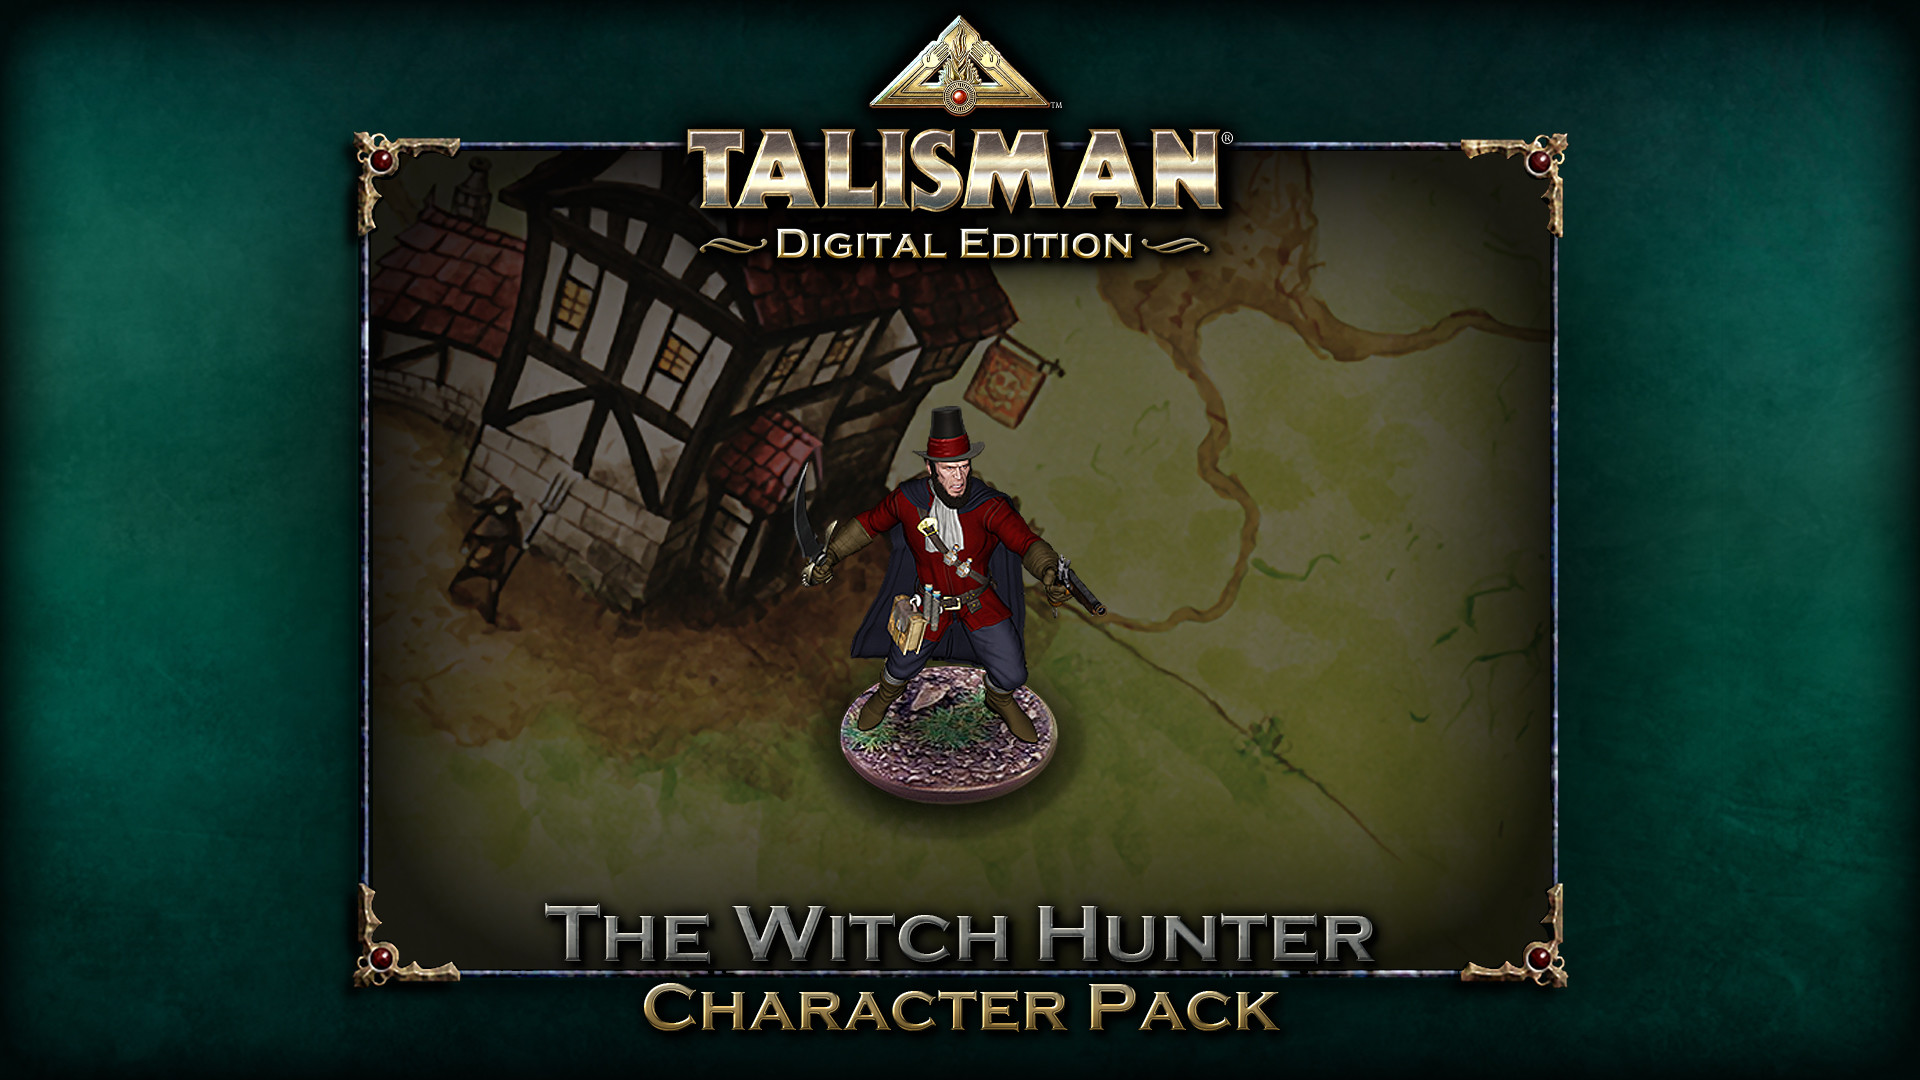 [$ 0.84] Talisman - Character Pack #21 Witch Hunter DLC Steam CD Key